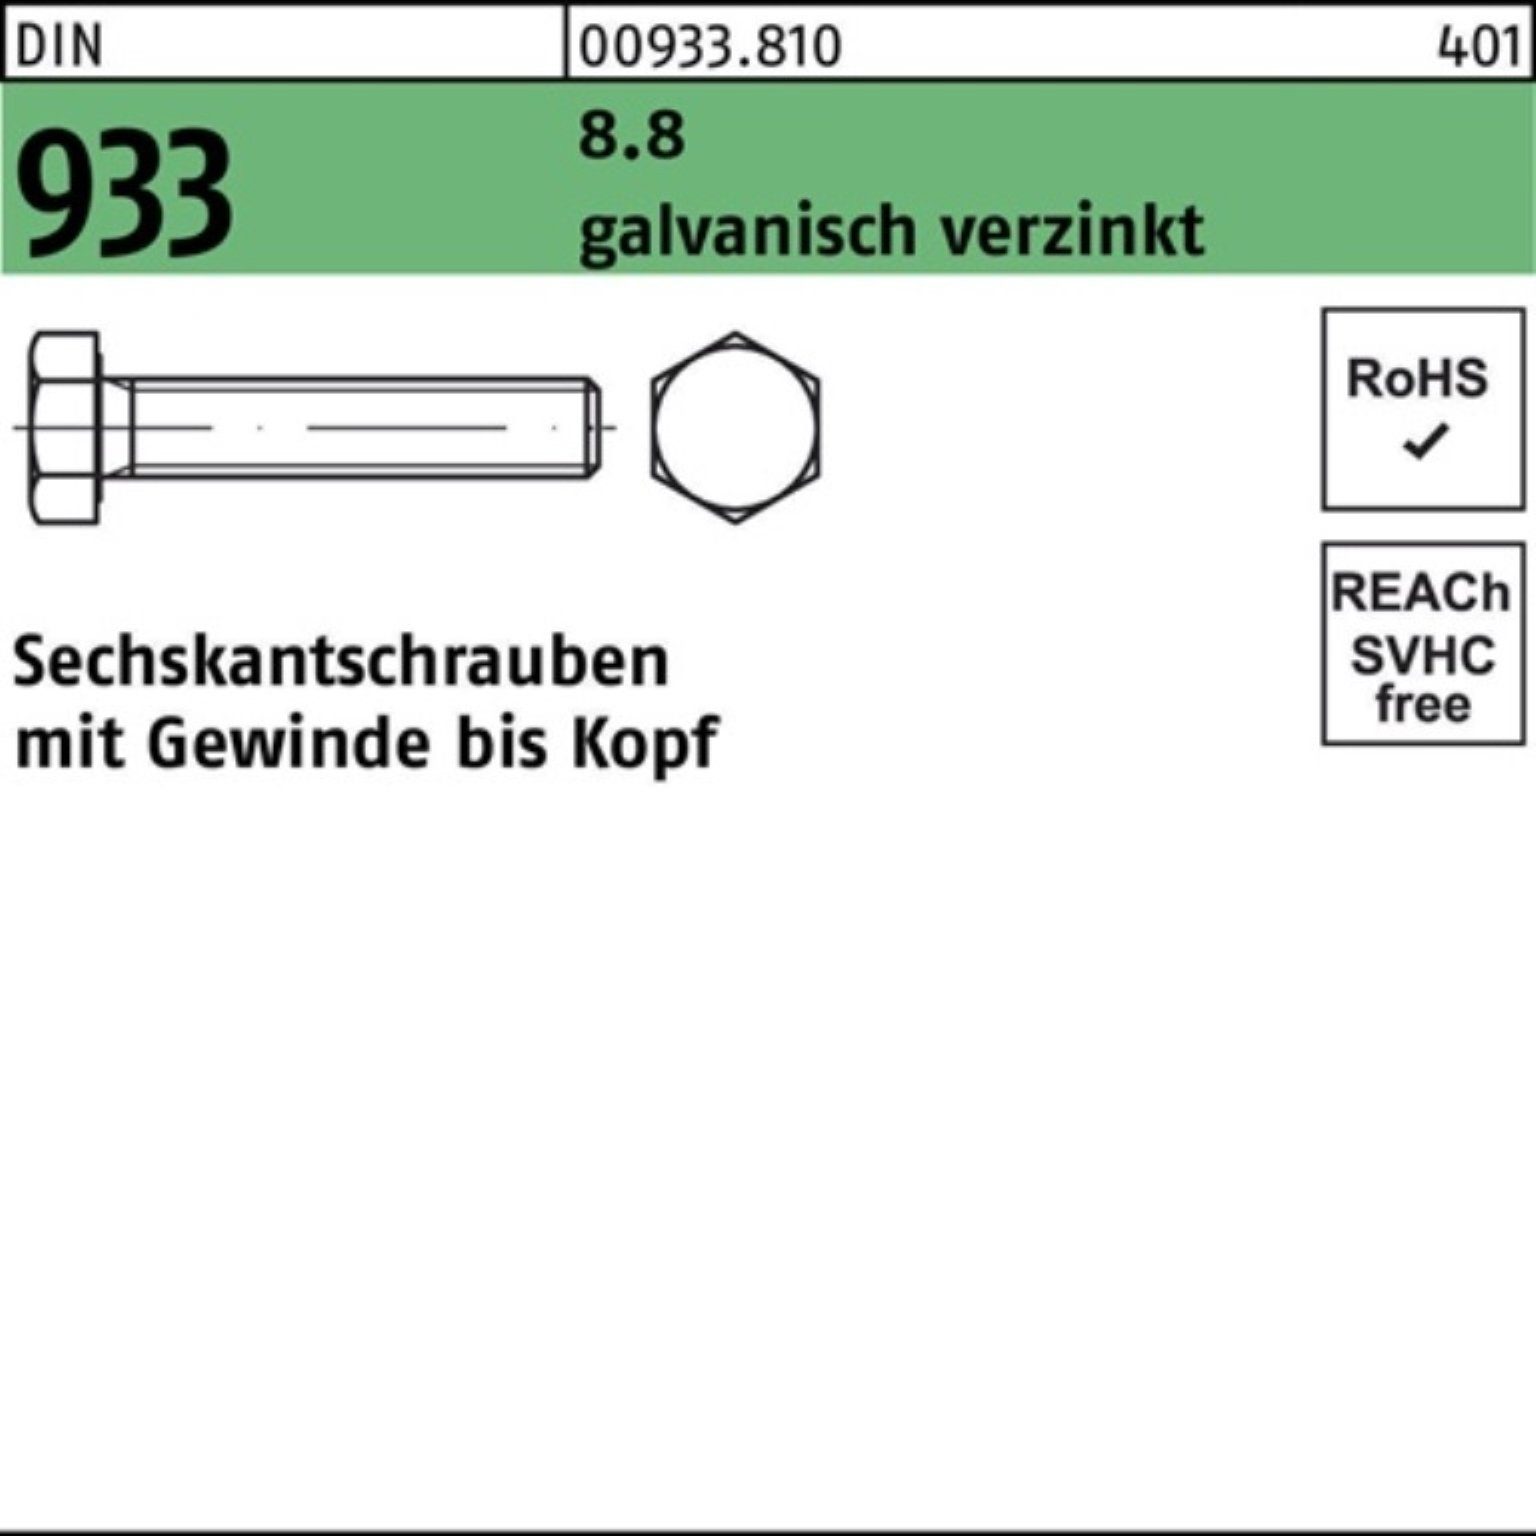 Sechskantschraube Pack 180 Sechskantschraube DIN 8.8 Stü 933 M24x 100er galv.verz. Reyher 1 VG